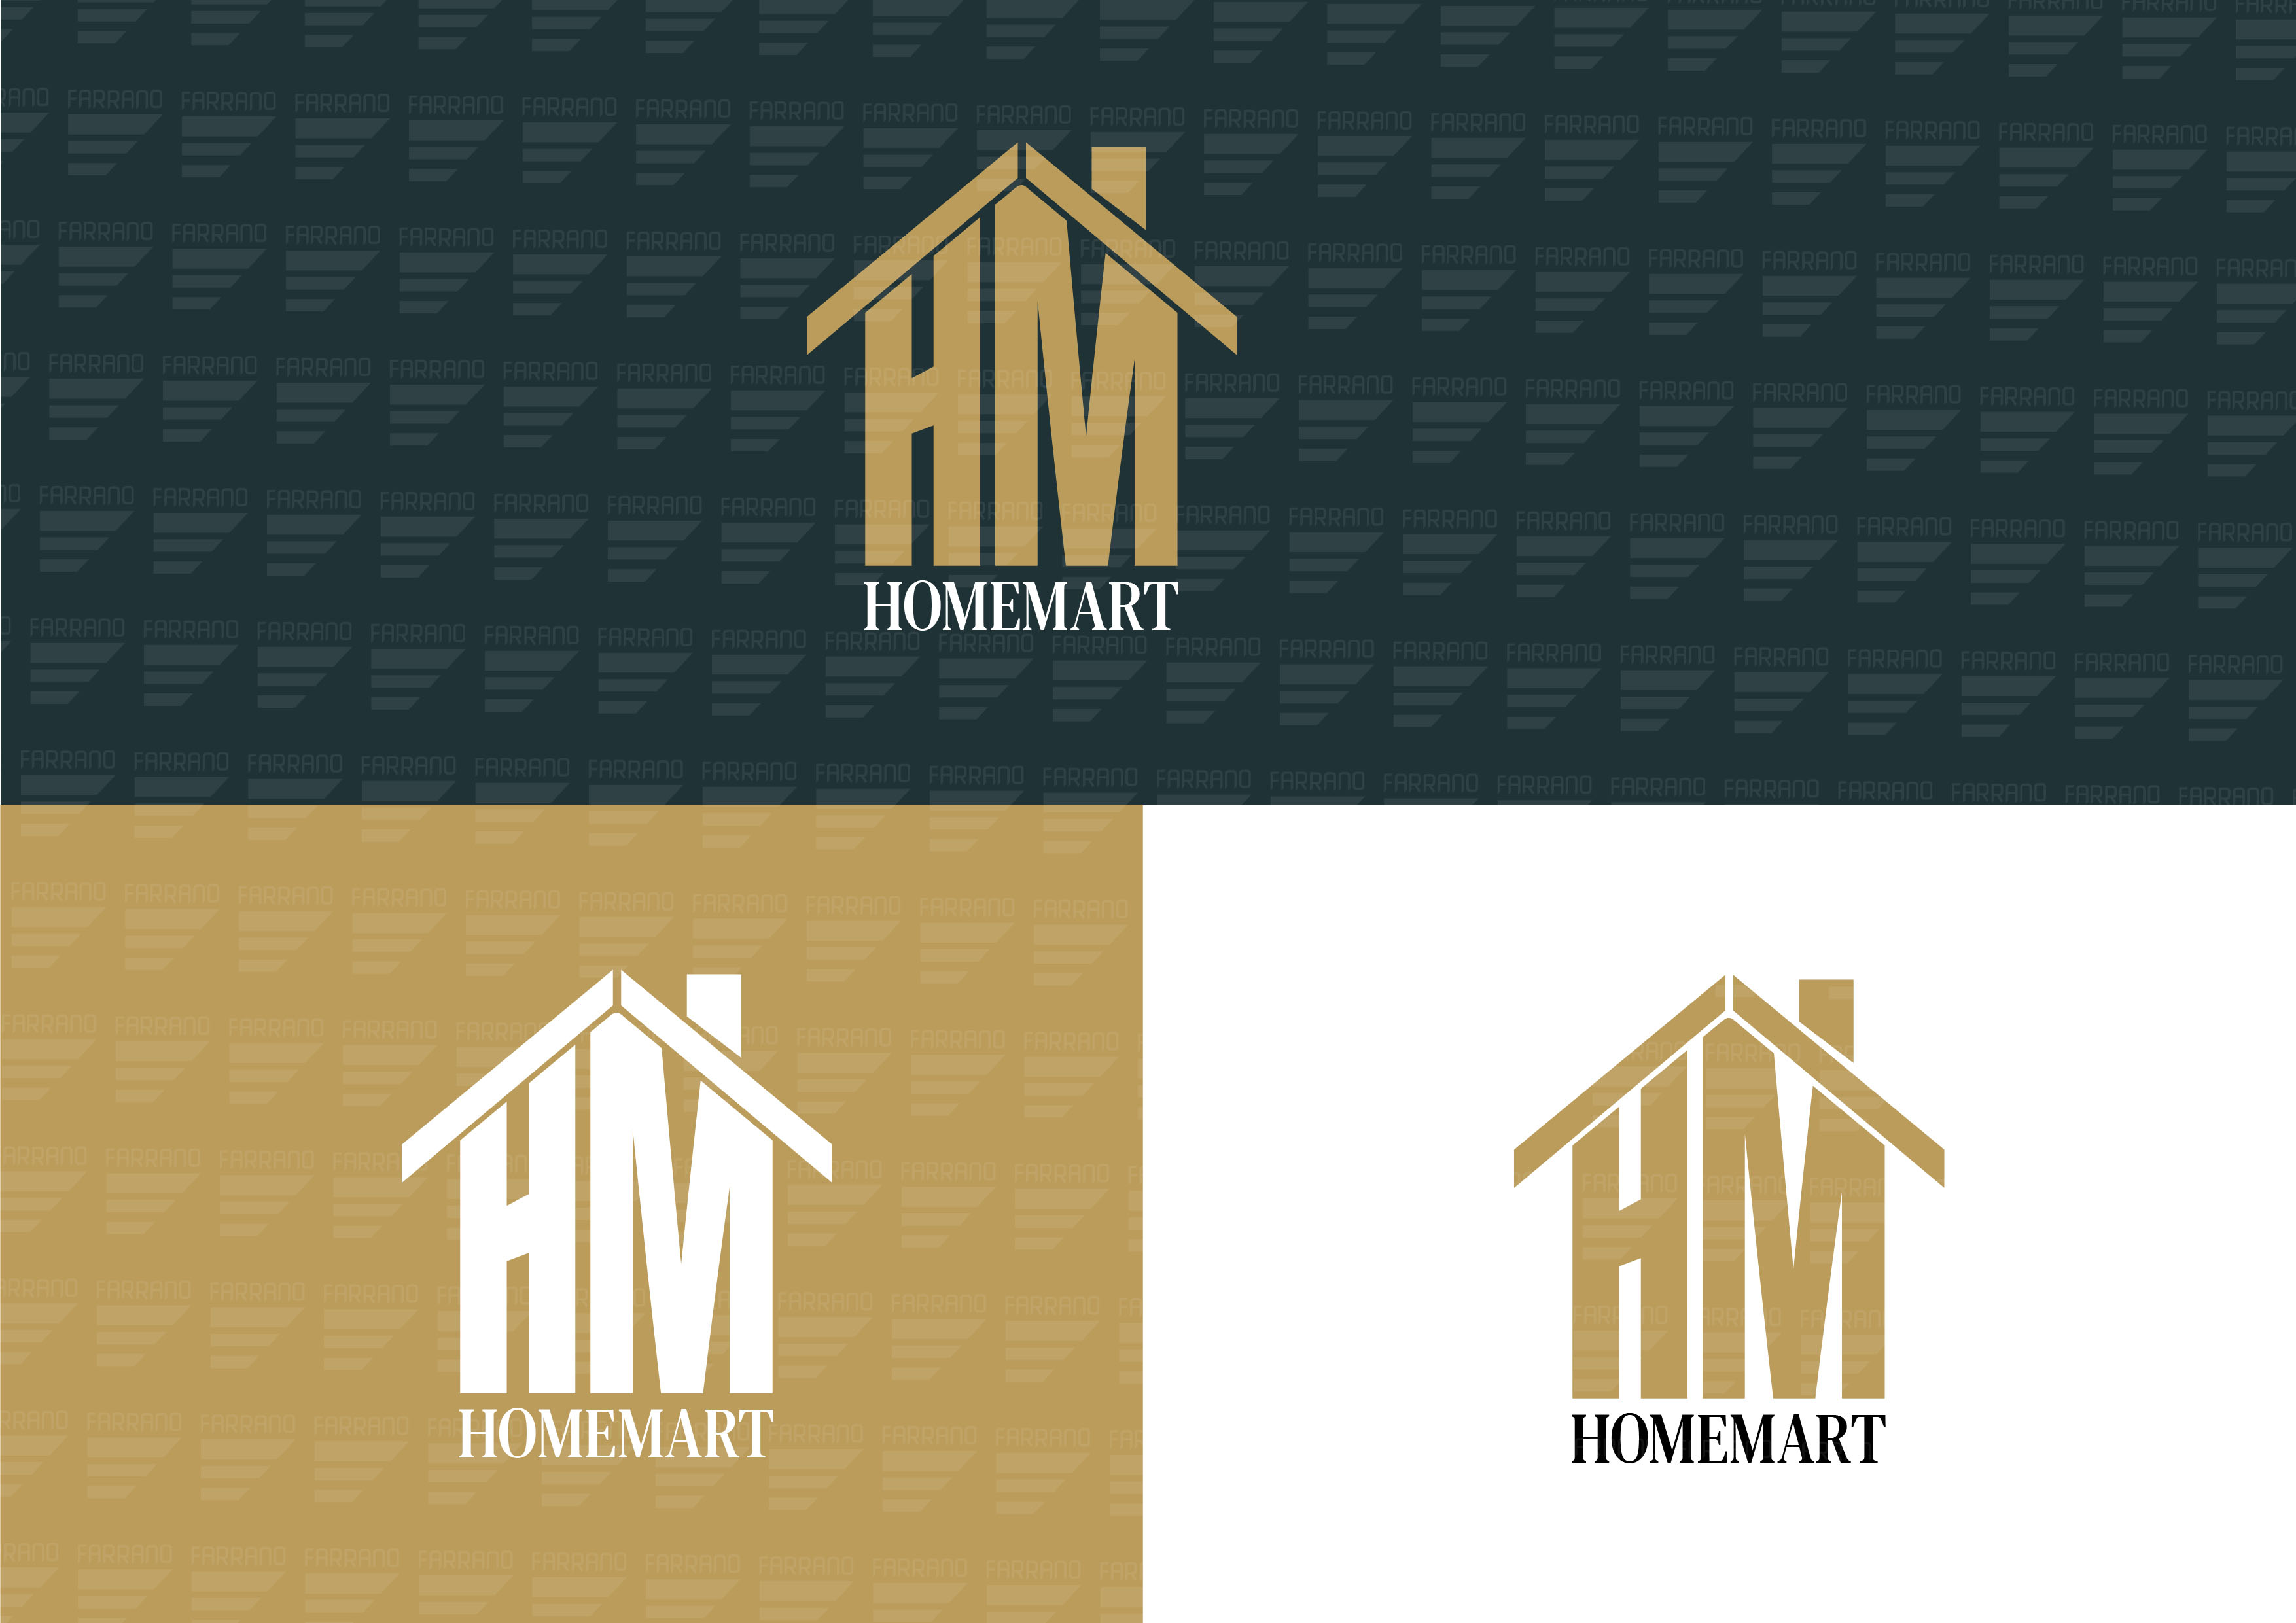 Logo for a homemart company.